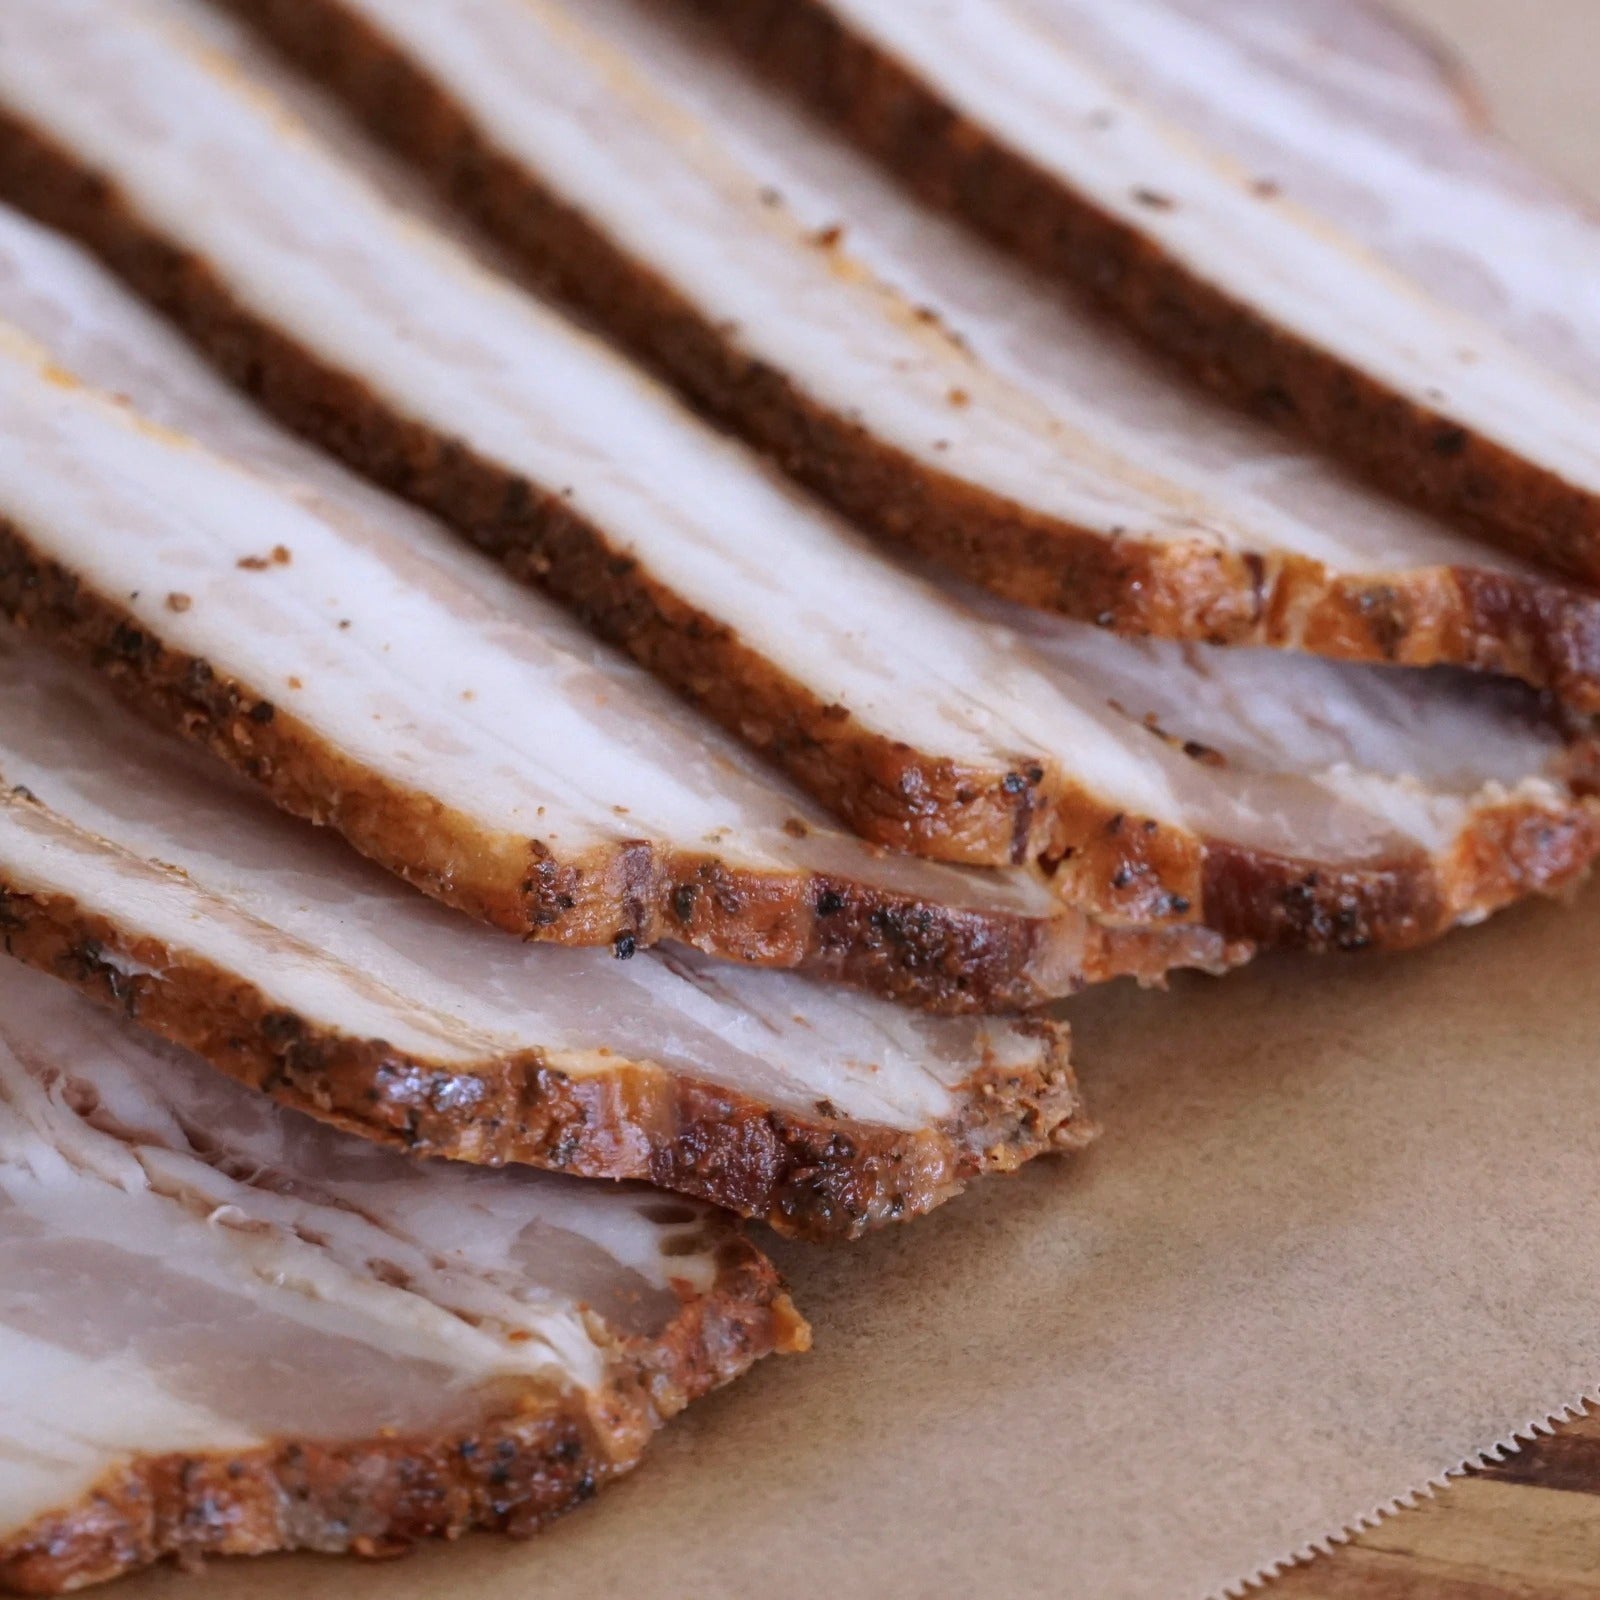 All-Natural Sugar-Free Free-Range Pork Smoked Bacon Slices Extra Thick (200g) - Horizon Farms